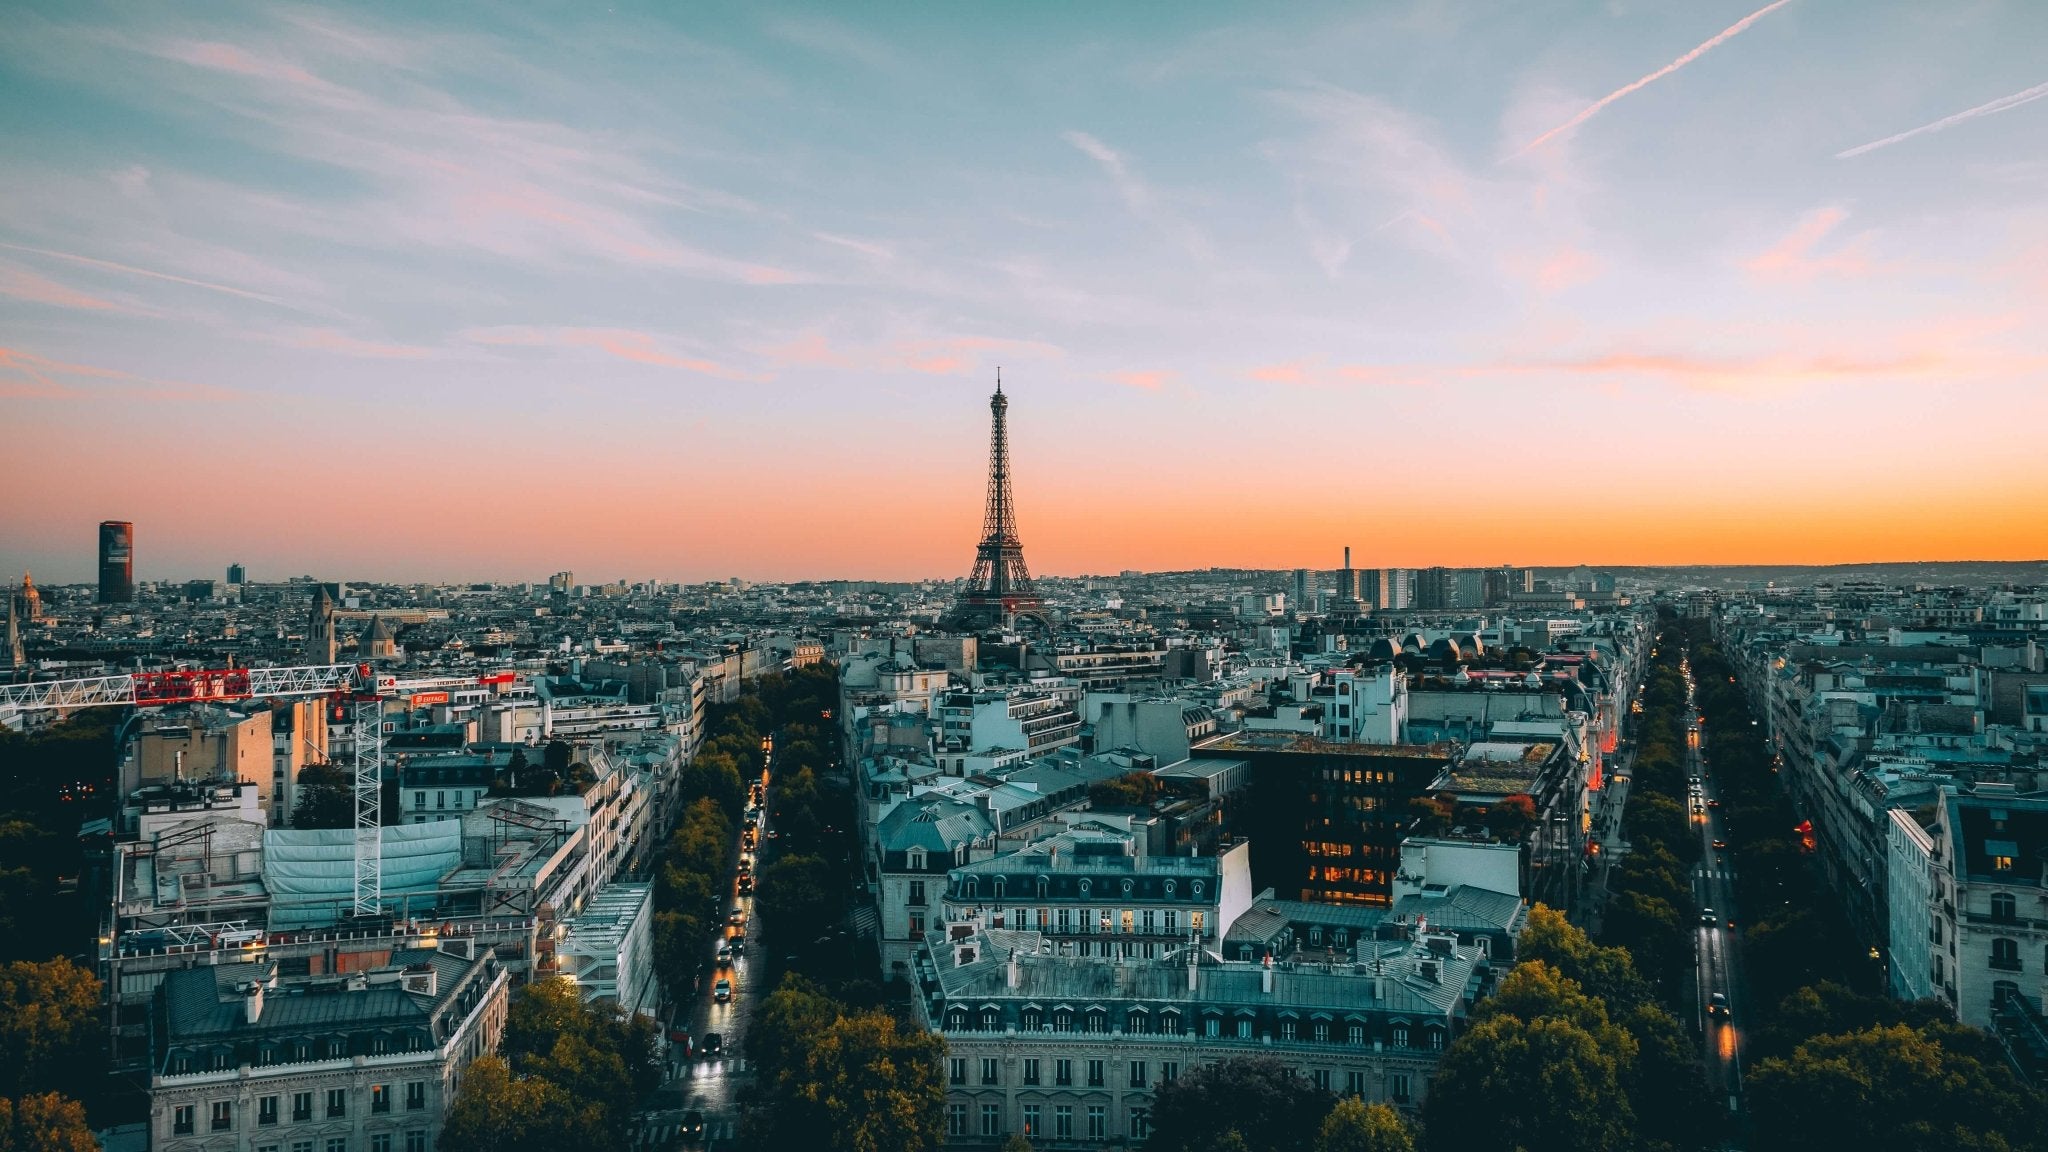 Paris' Rental E-Scooter Ban Goes into Effect - GOTRAX